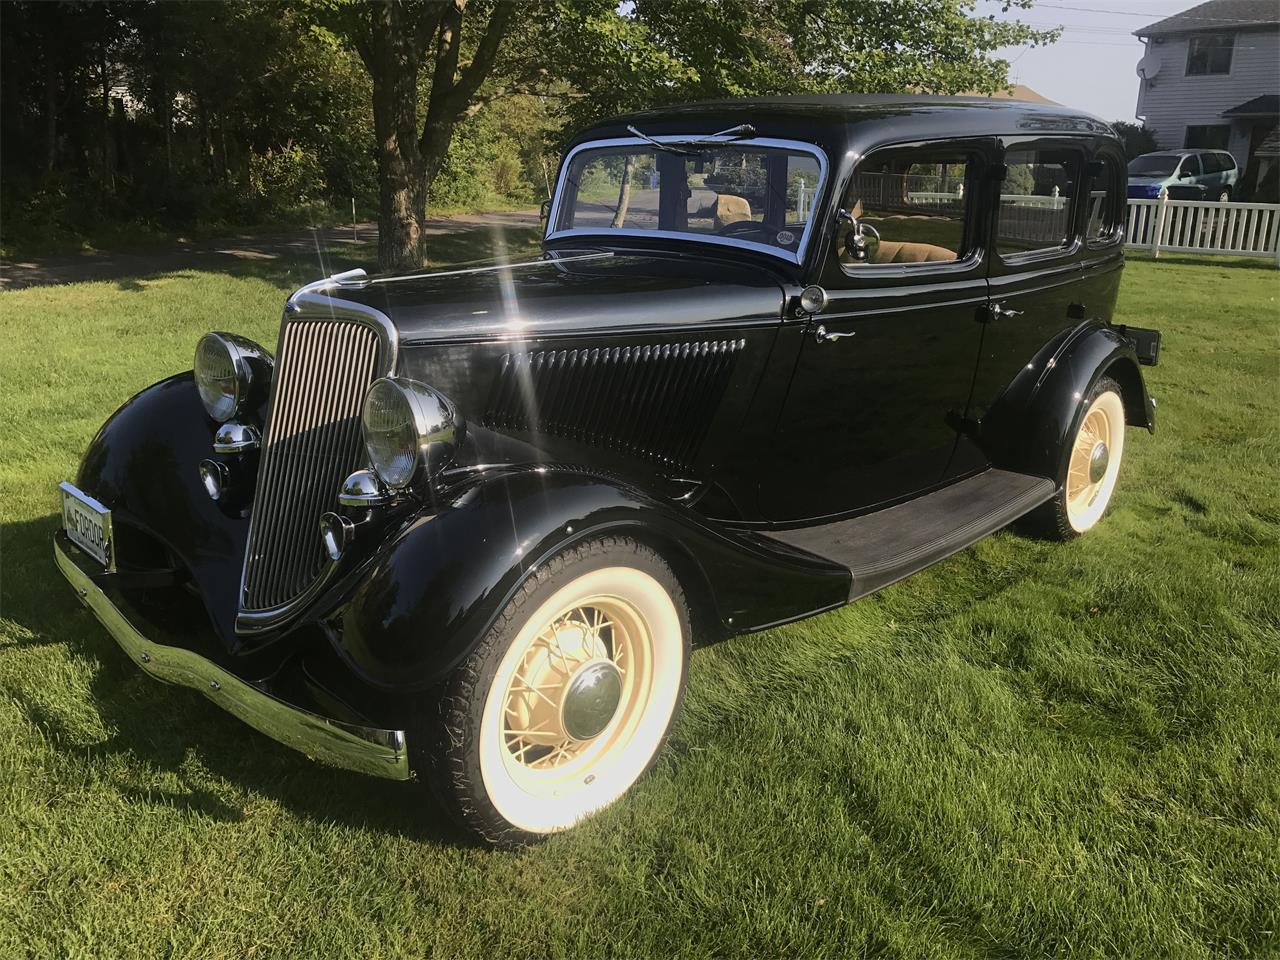 For Sale: 1934 Ford Model 40 in Ellington, Connecticut.